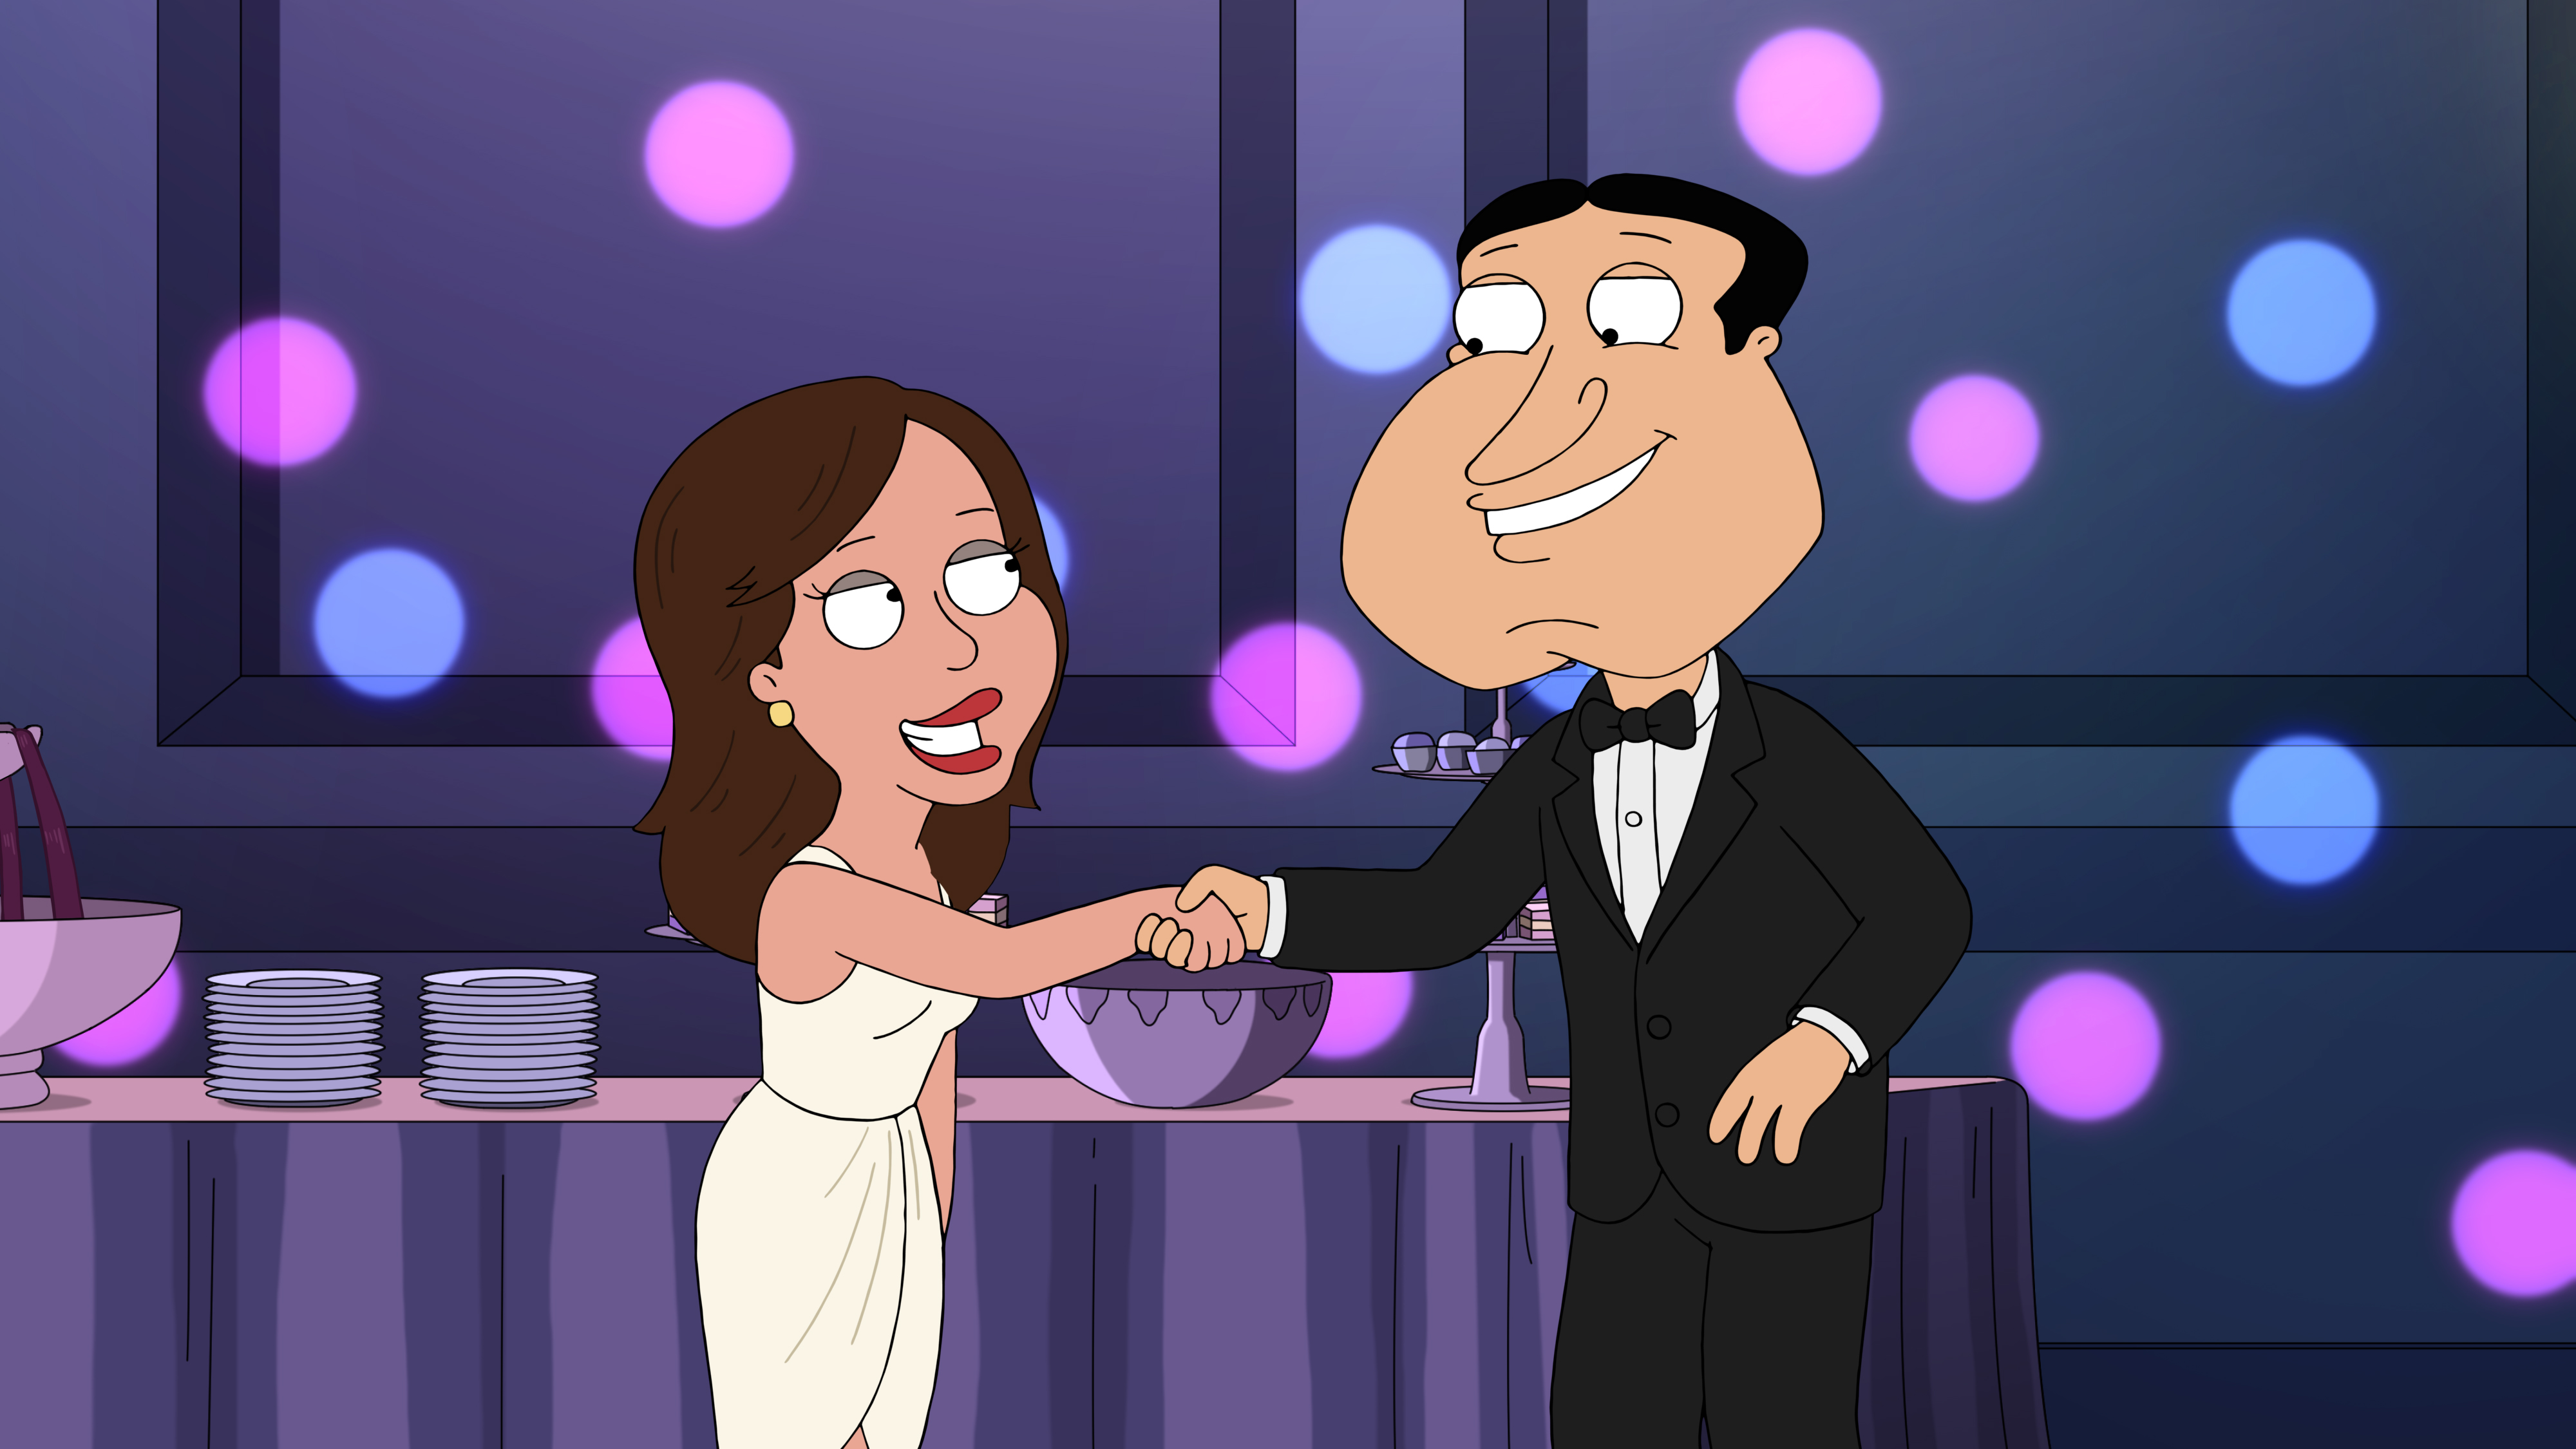 "Family Guy" No Giggity, No Doubt